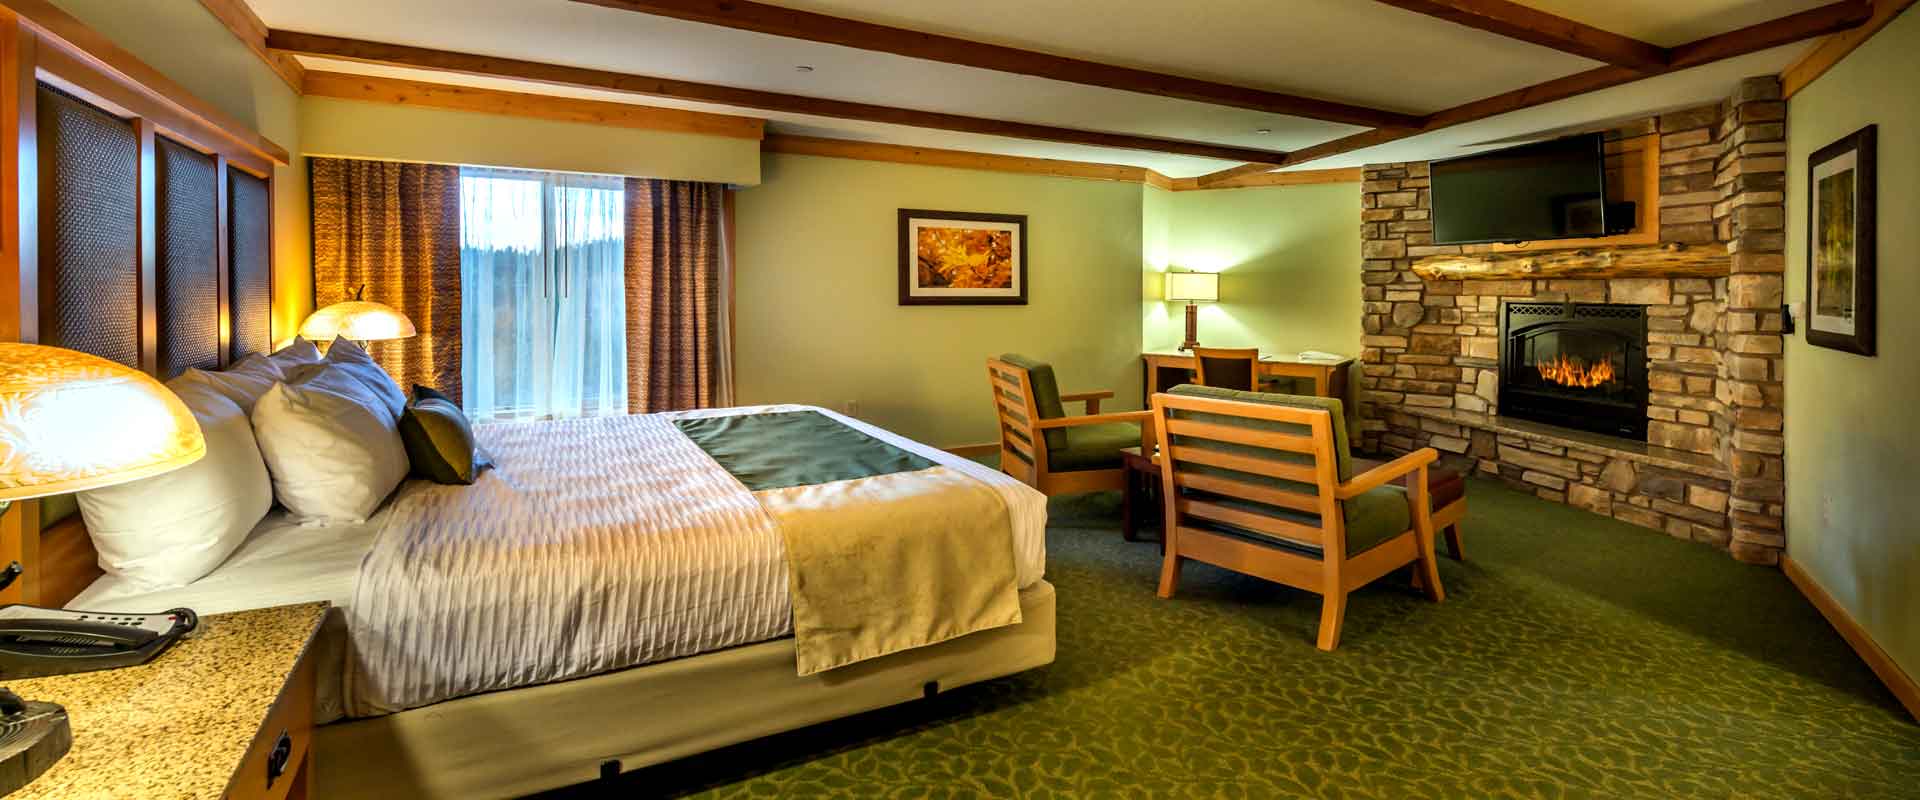 Myeres Hotel | San Luis Obispo Budget Cheap Lodging Accommodations Hotels Motels